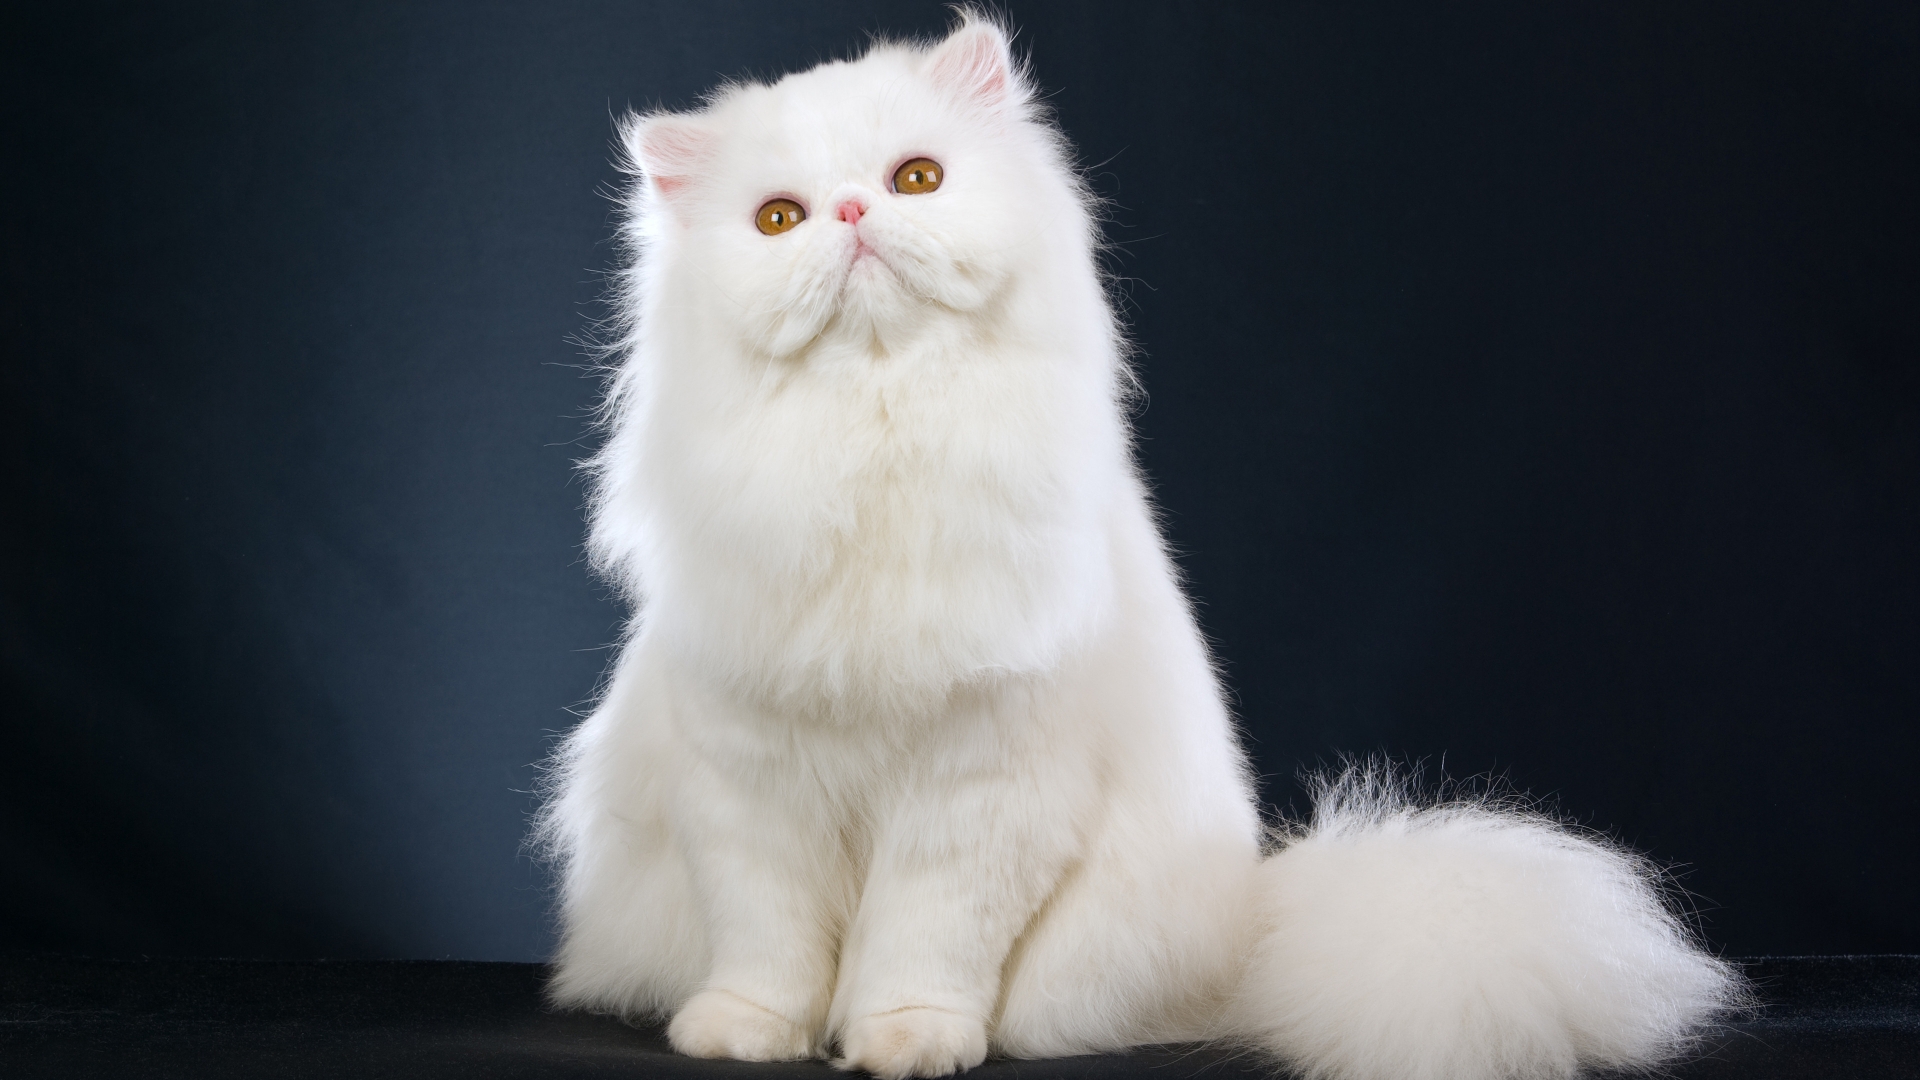 Cute White Cat for 1920 x 1080 HDTV 1080p resolution